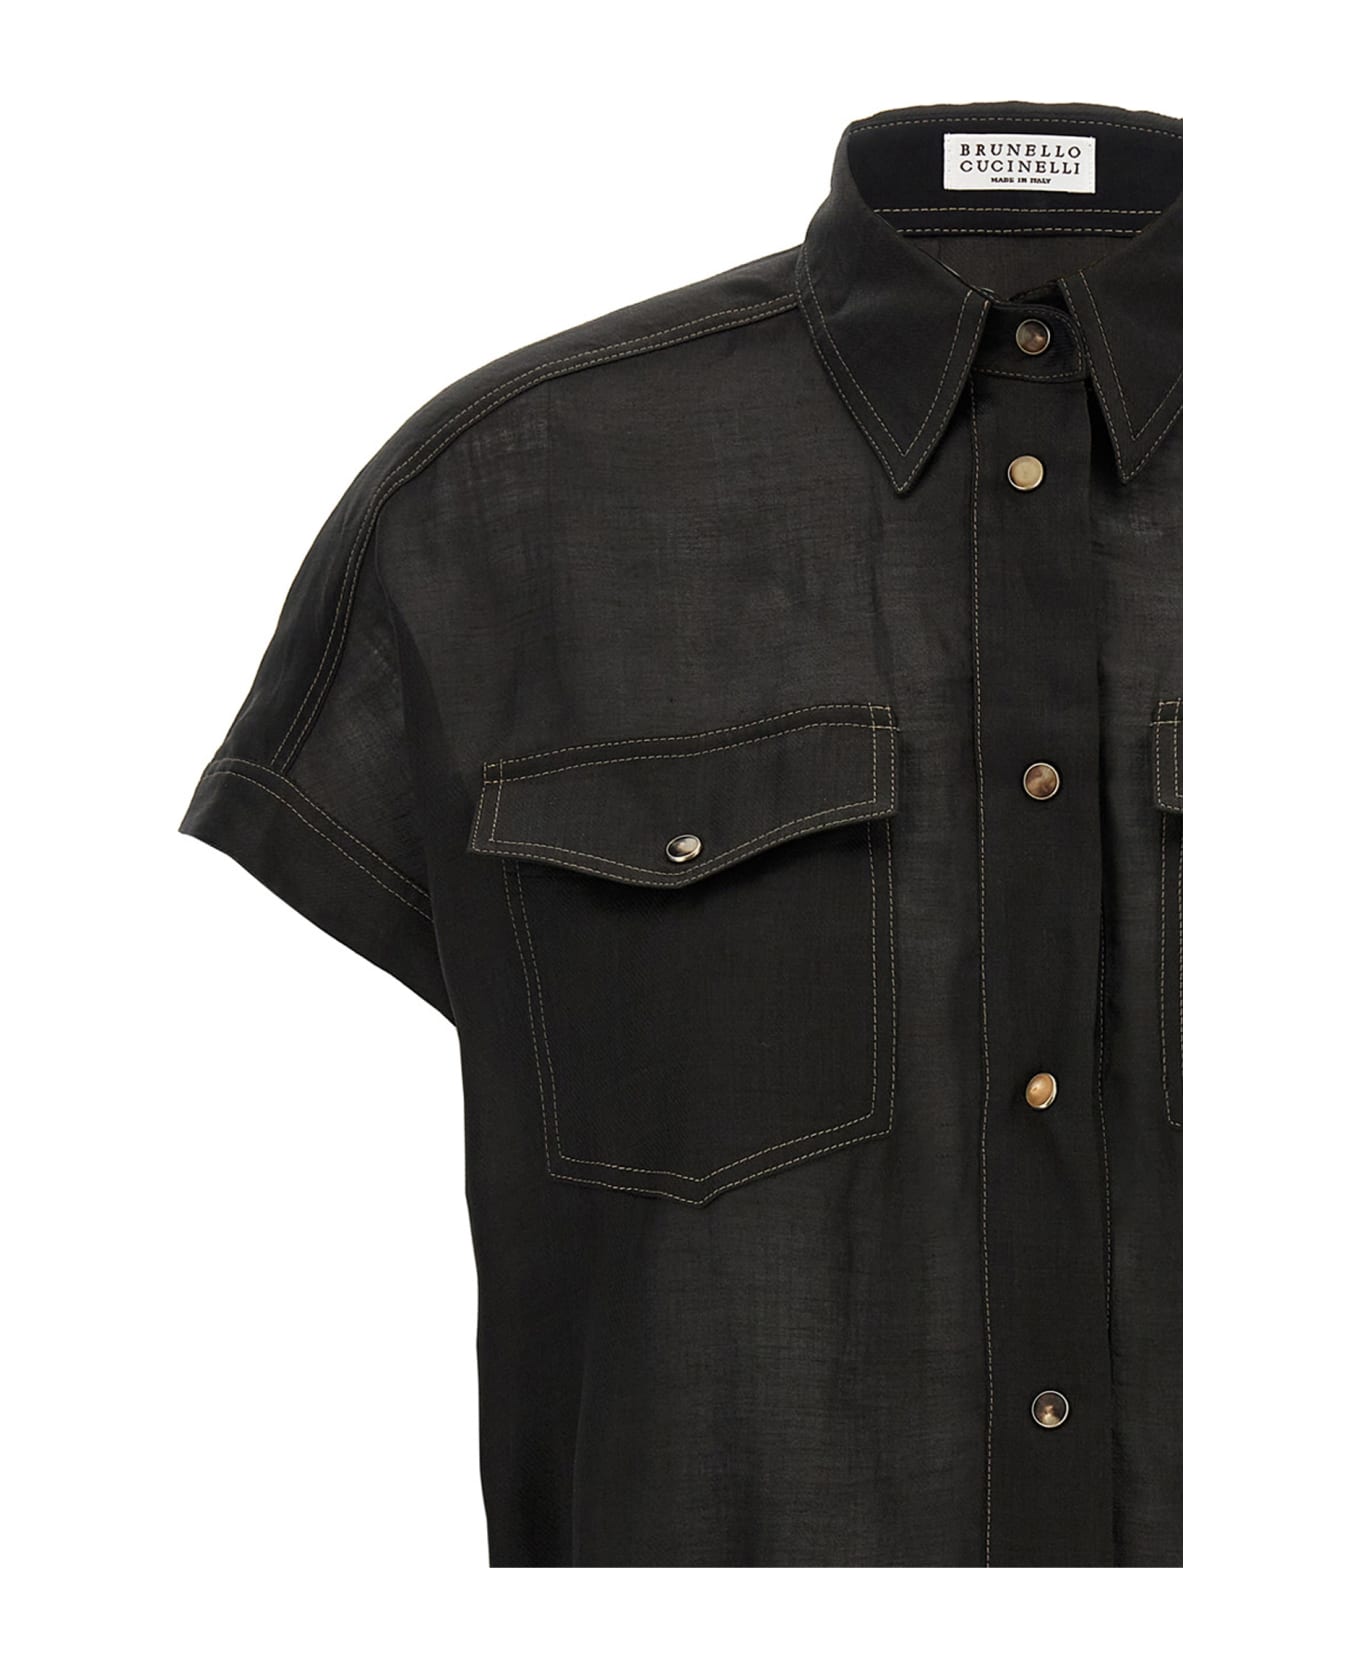 Brunello Cucinelli 'monile' Shirt - Black   シャツ